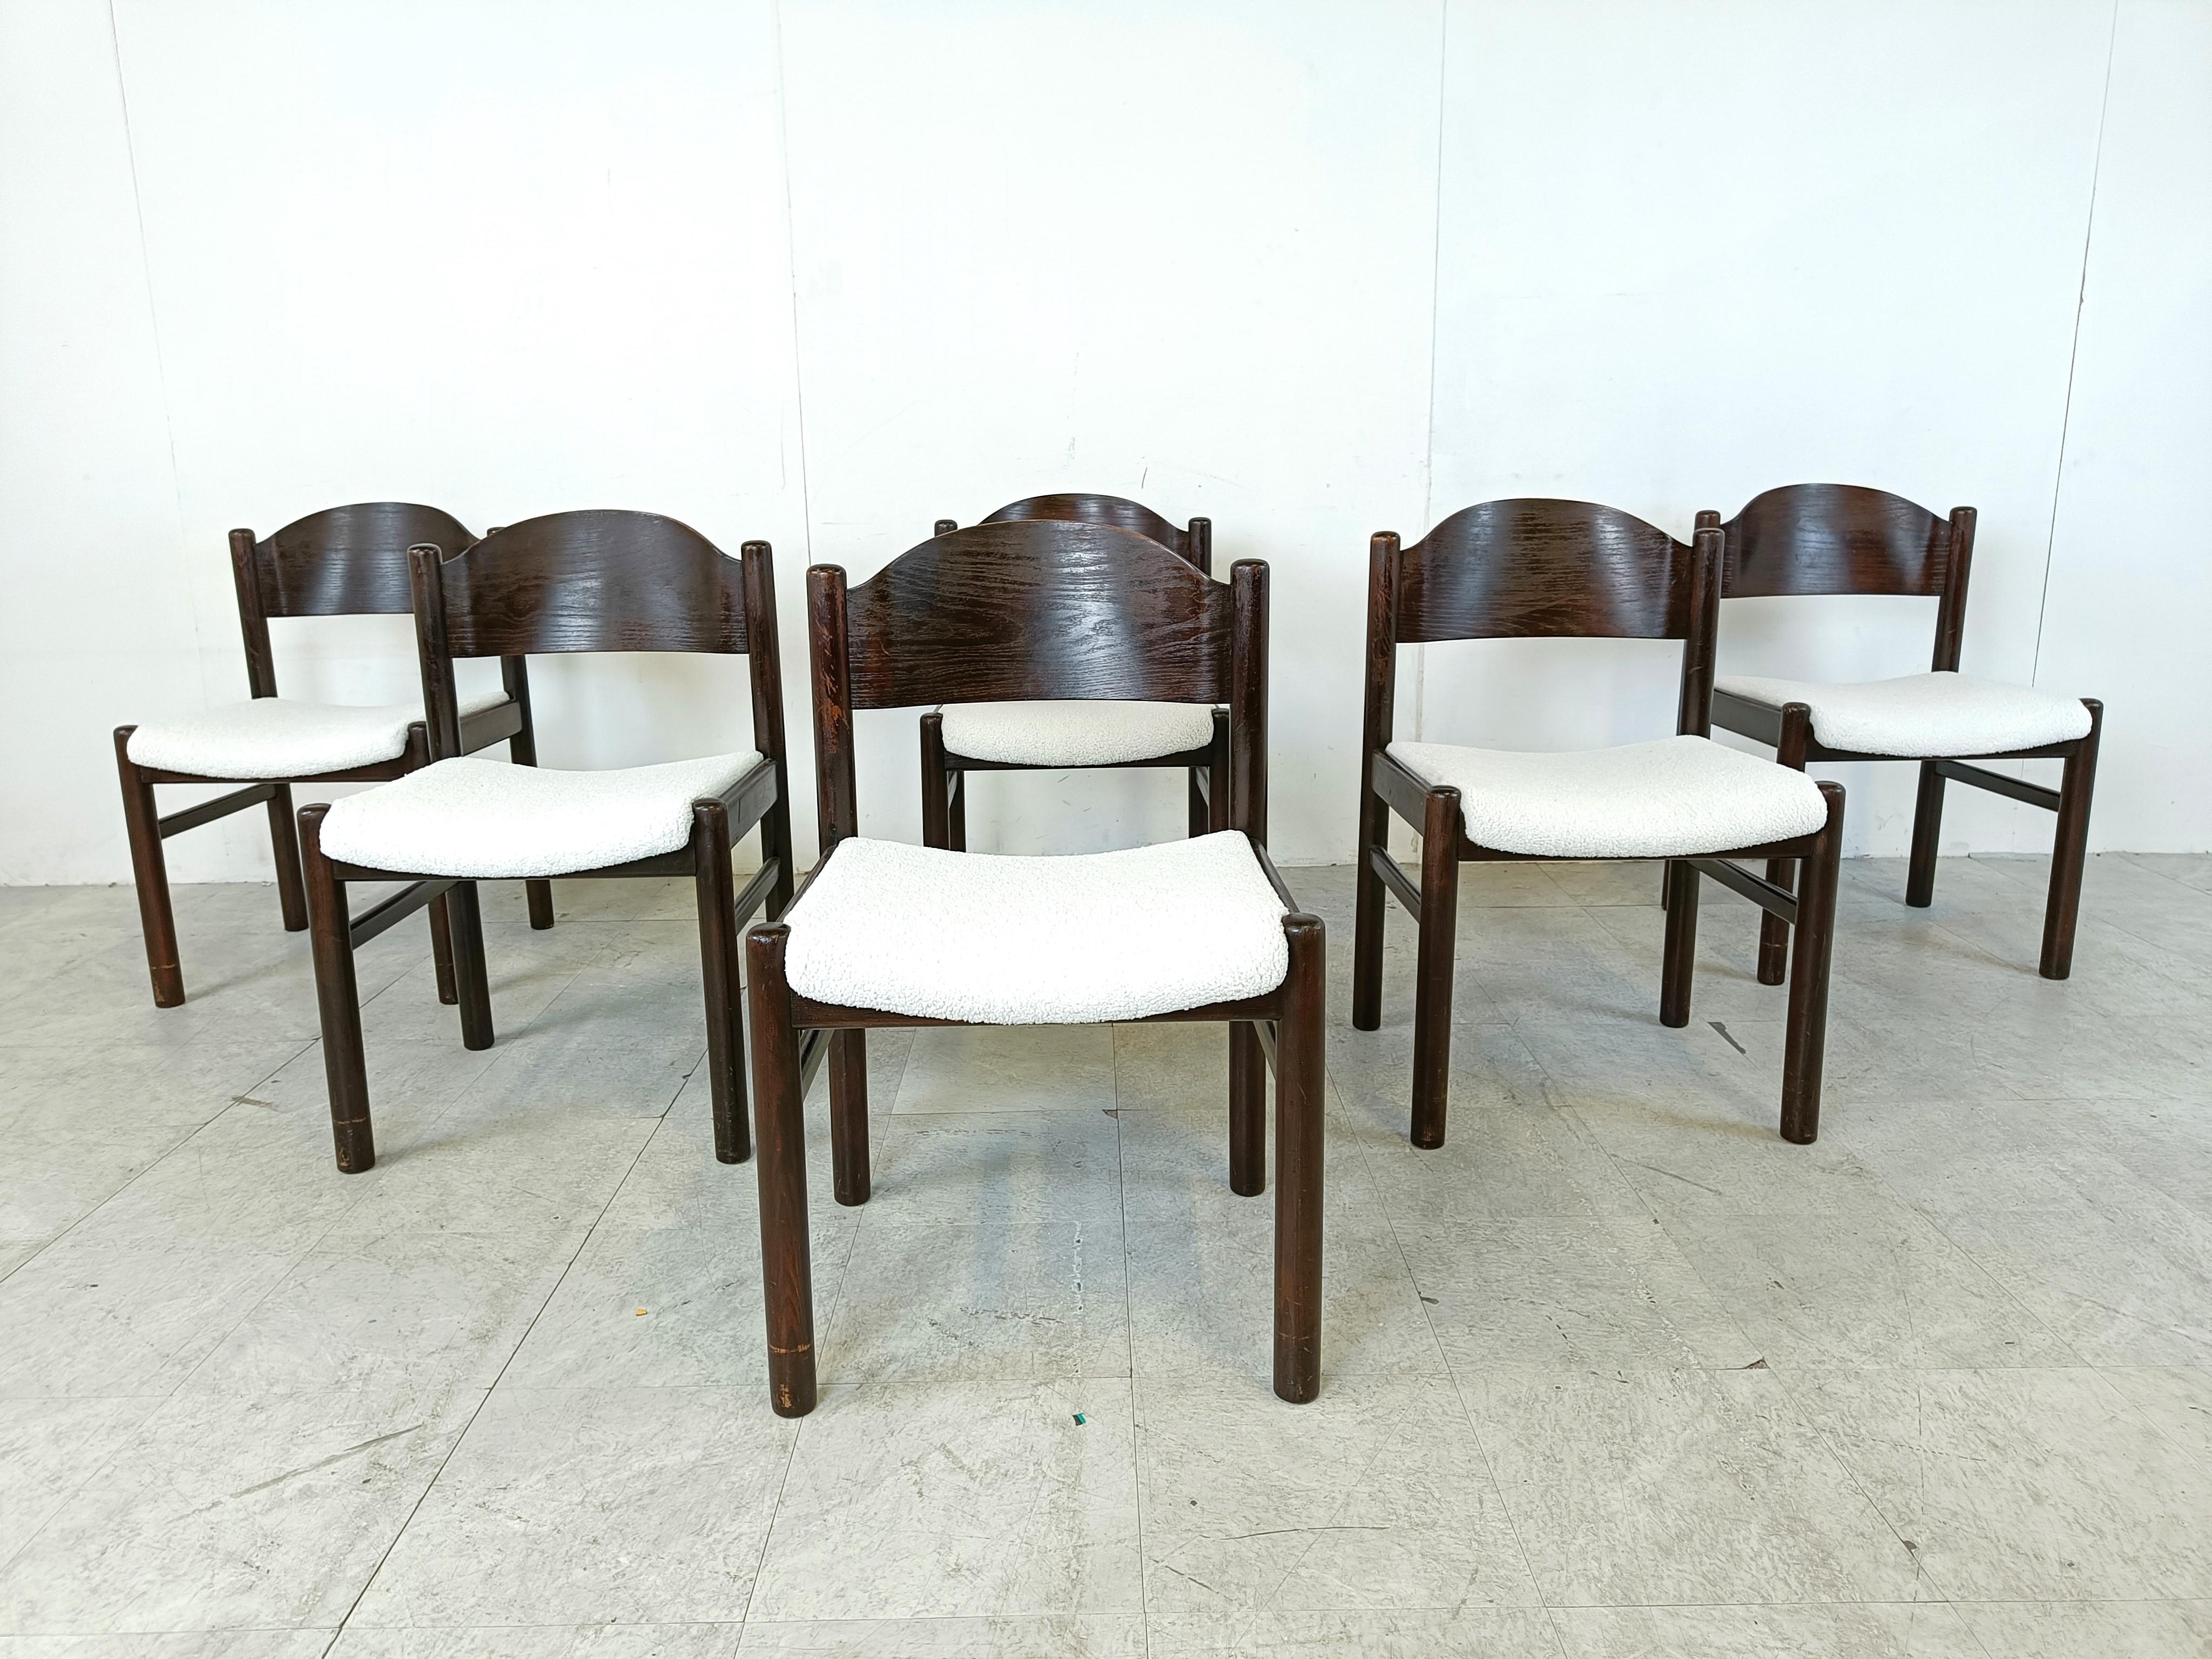 German Vintage brutalist dining chairs, set of 6 - 1960s